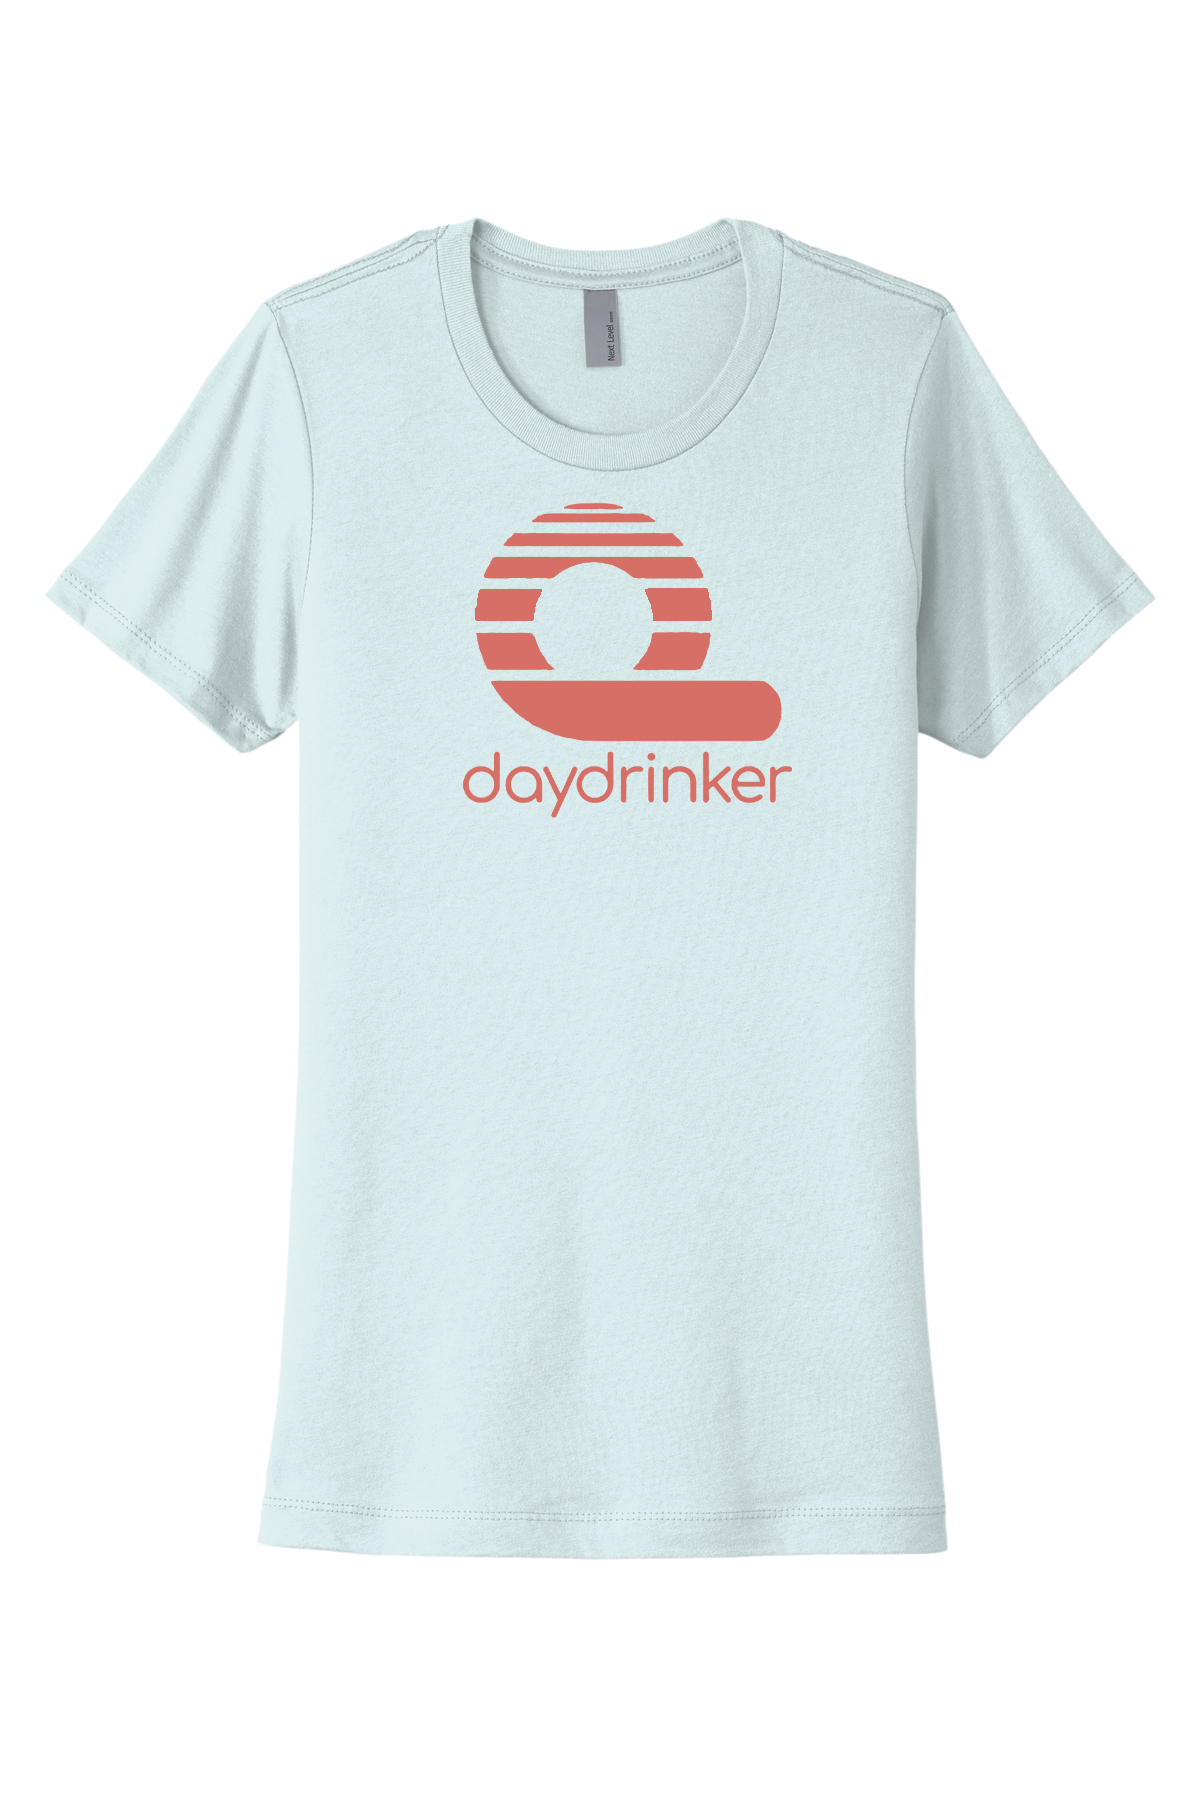 Daydrinker Cotton Crew Tee - Solid Logo